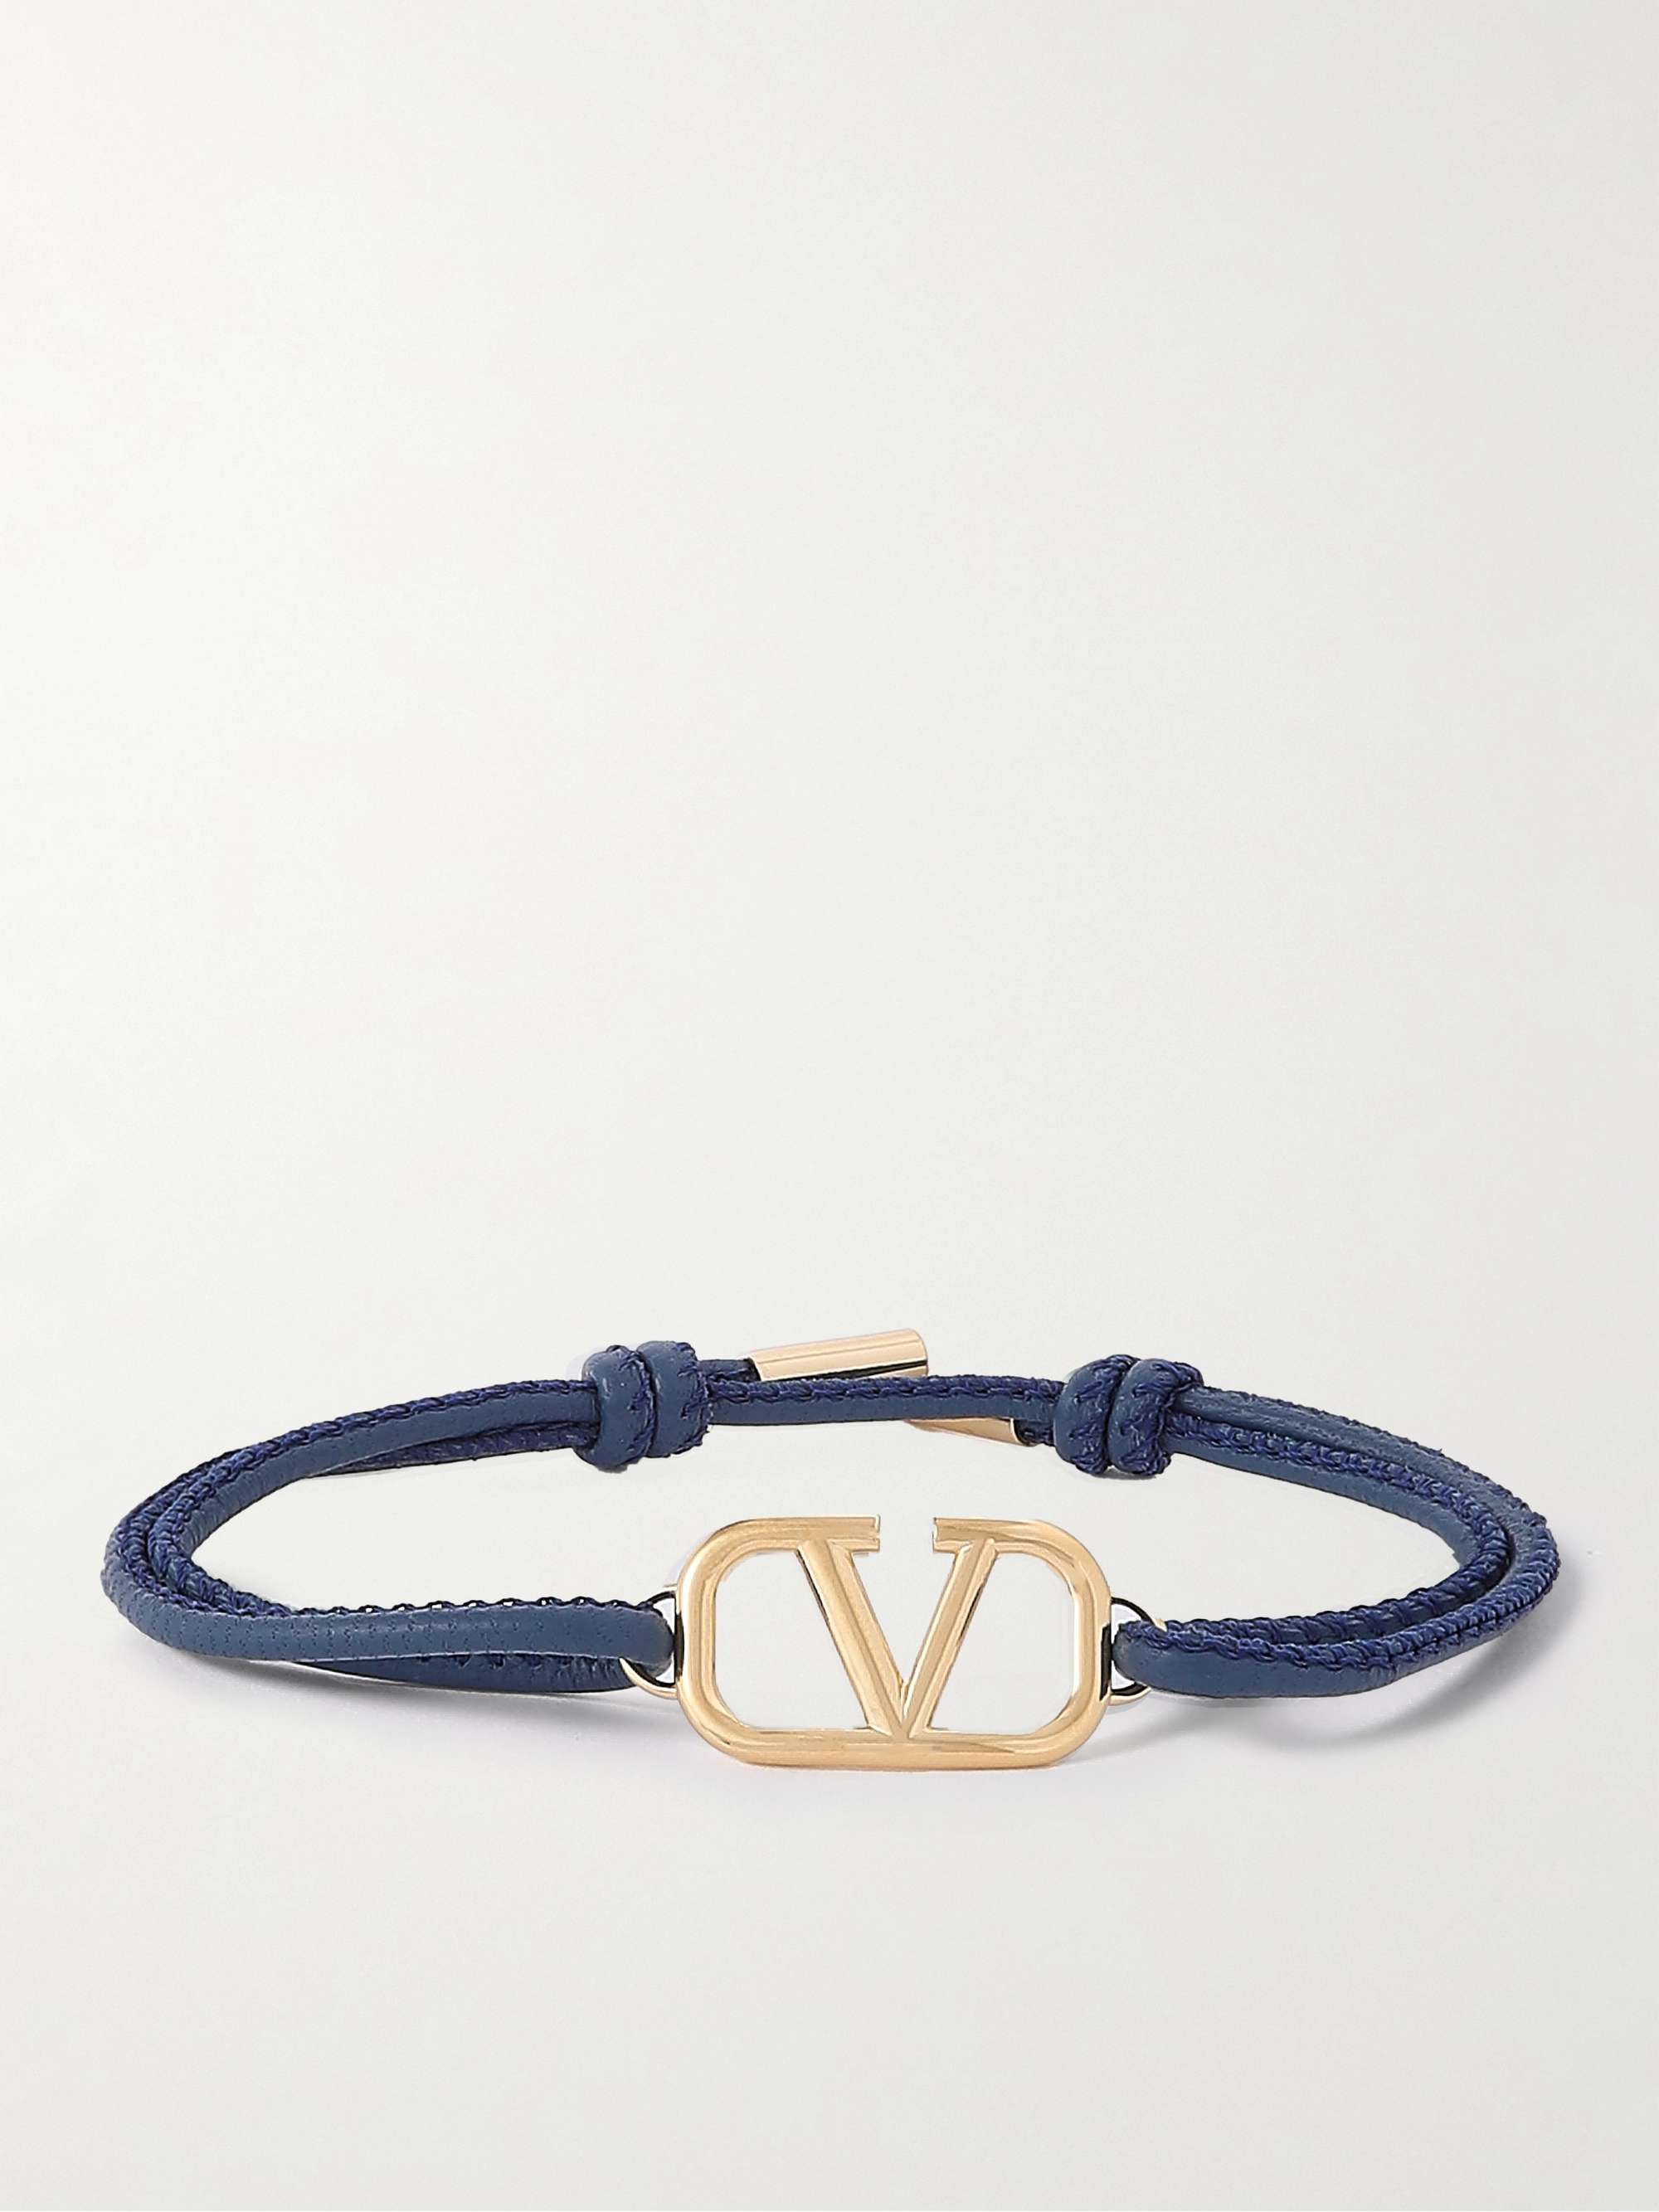 Blue Valentino Garavani Leather Gold-Tone Bracelet | VALENTINO GARAVANI | MR  PORTER